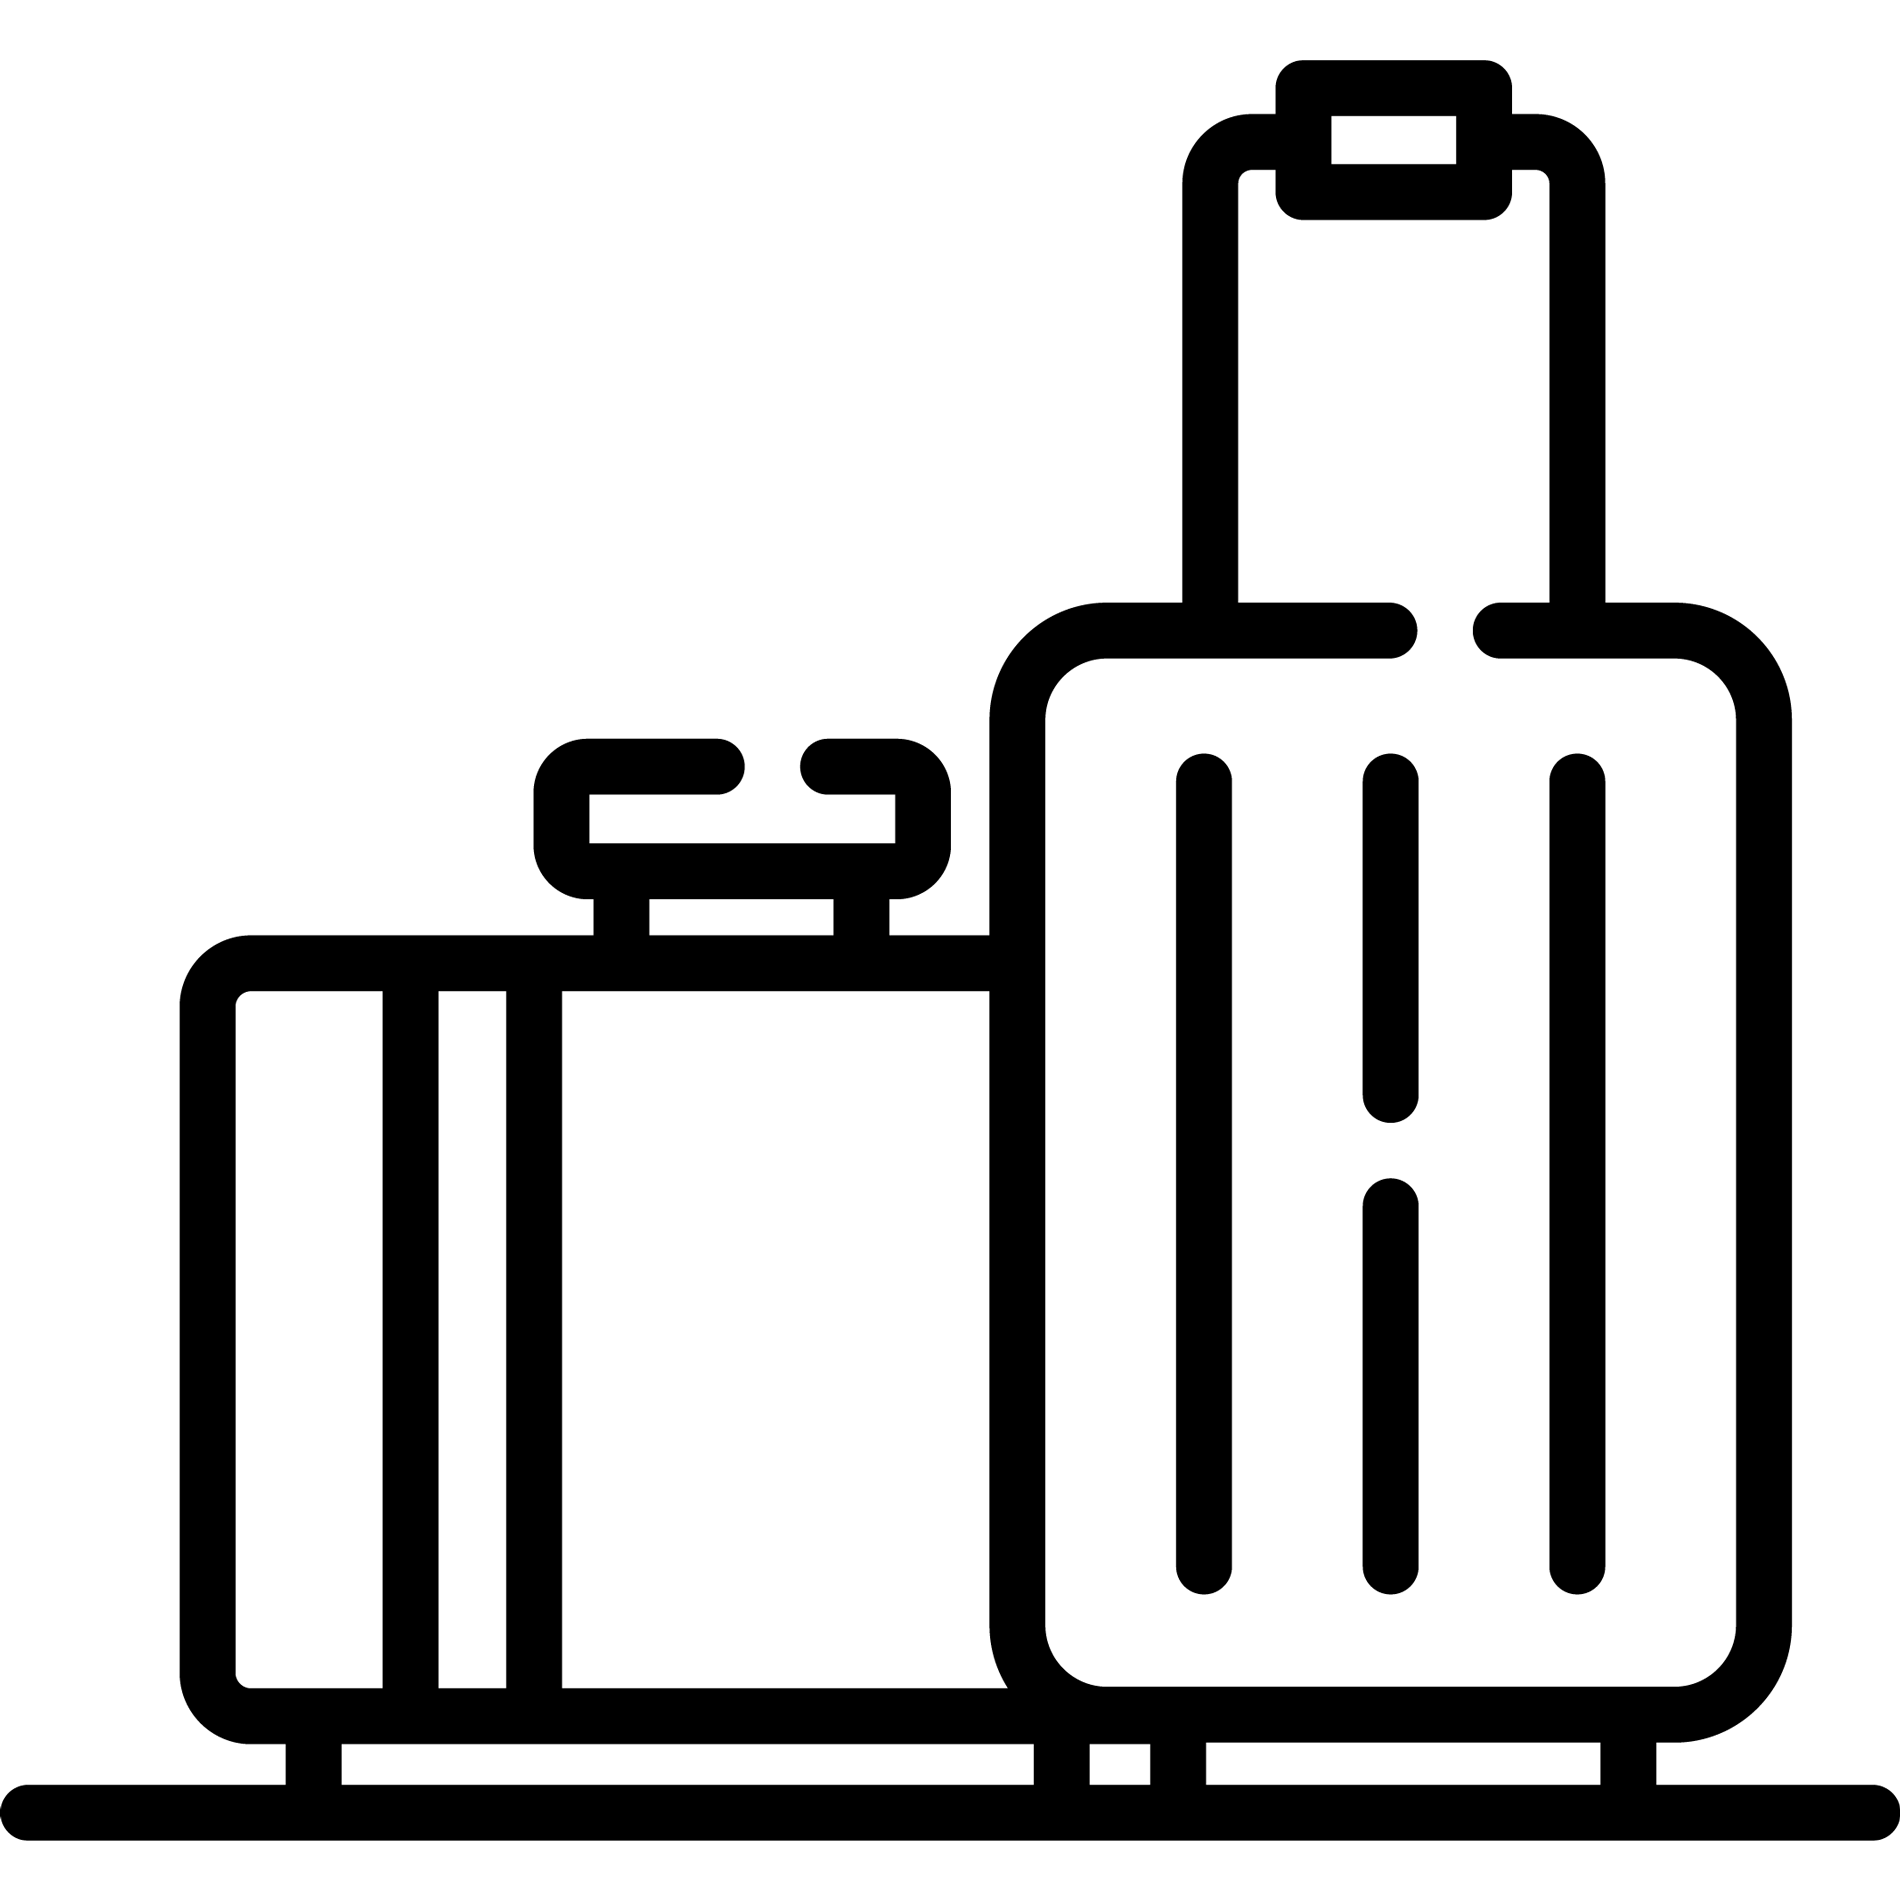 Luggage storage